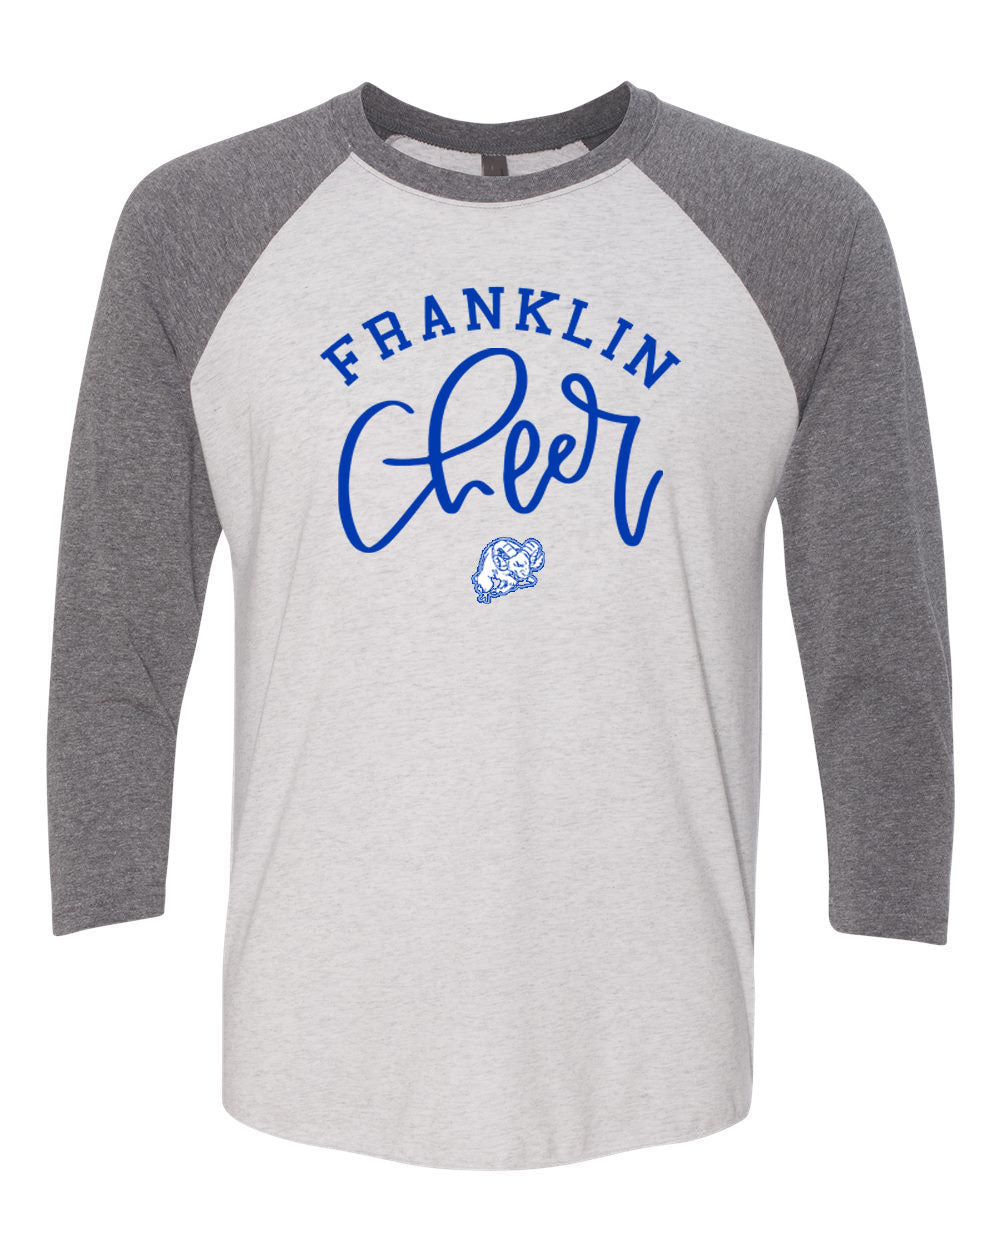 Franklin Cheer Design 3 raglan shirt